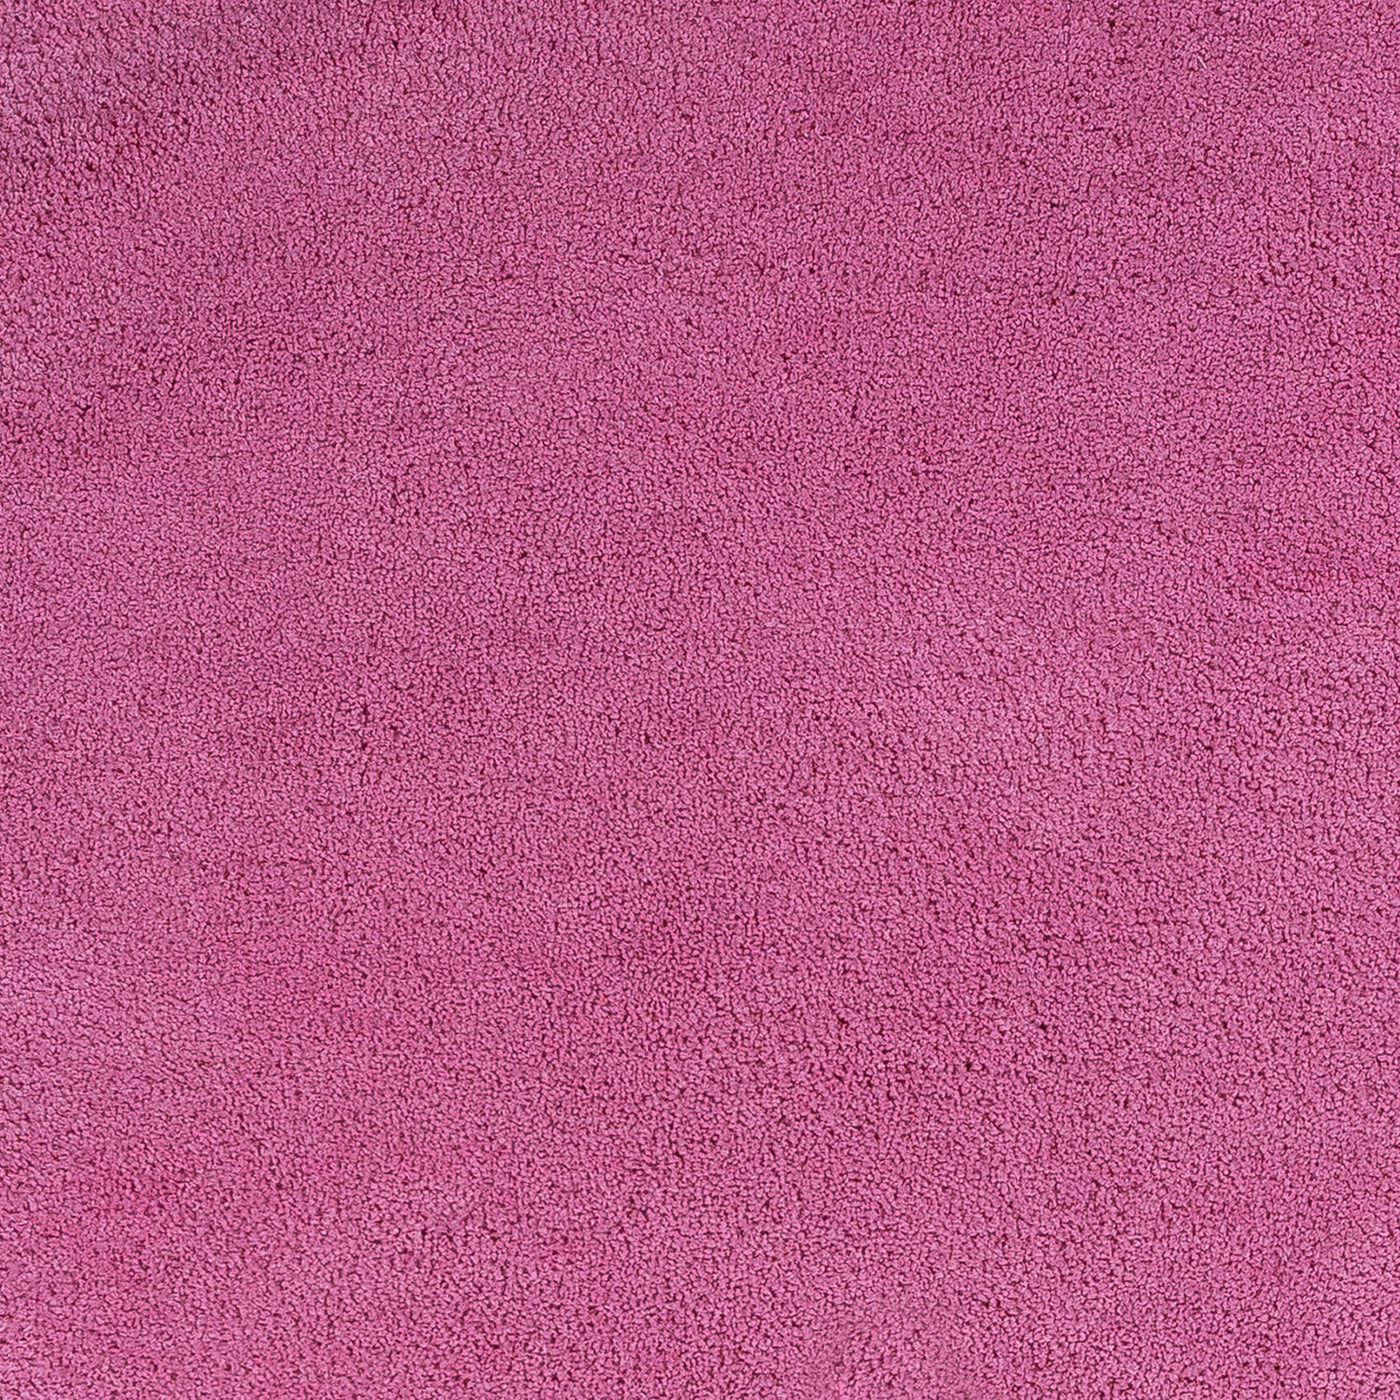 Bahia XII 6' - Hot Pink Round Area Rug